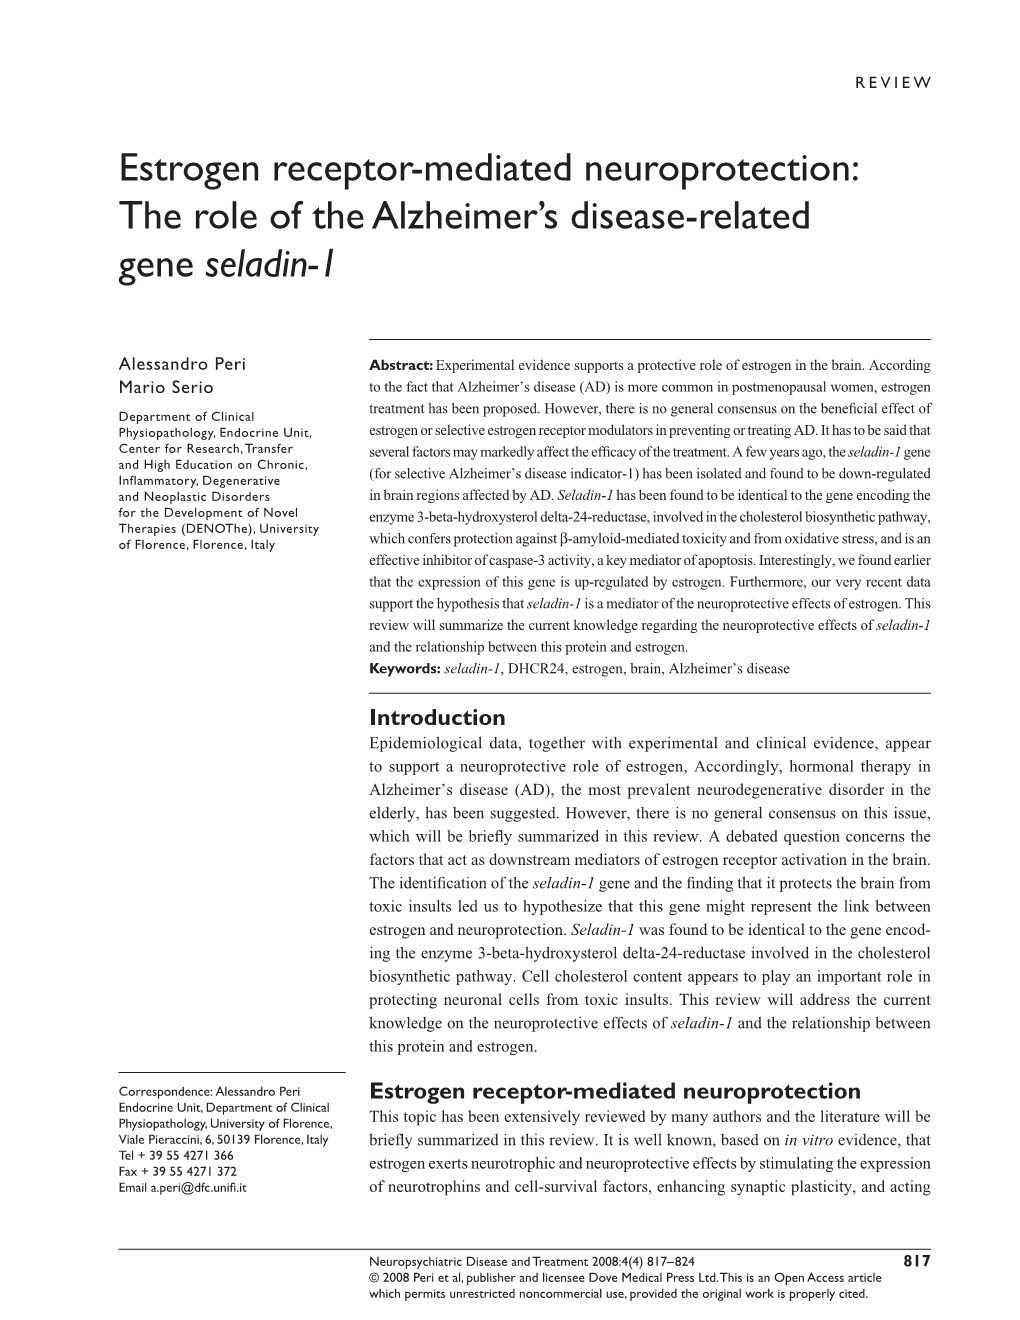 Estrogen Receptor-Mediated Neuroprotection: the Role of the Alzheimer’S Disease-Related Gene Seladin-1